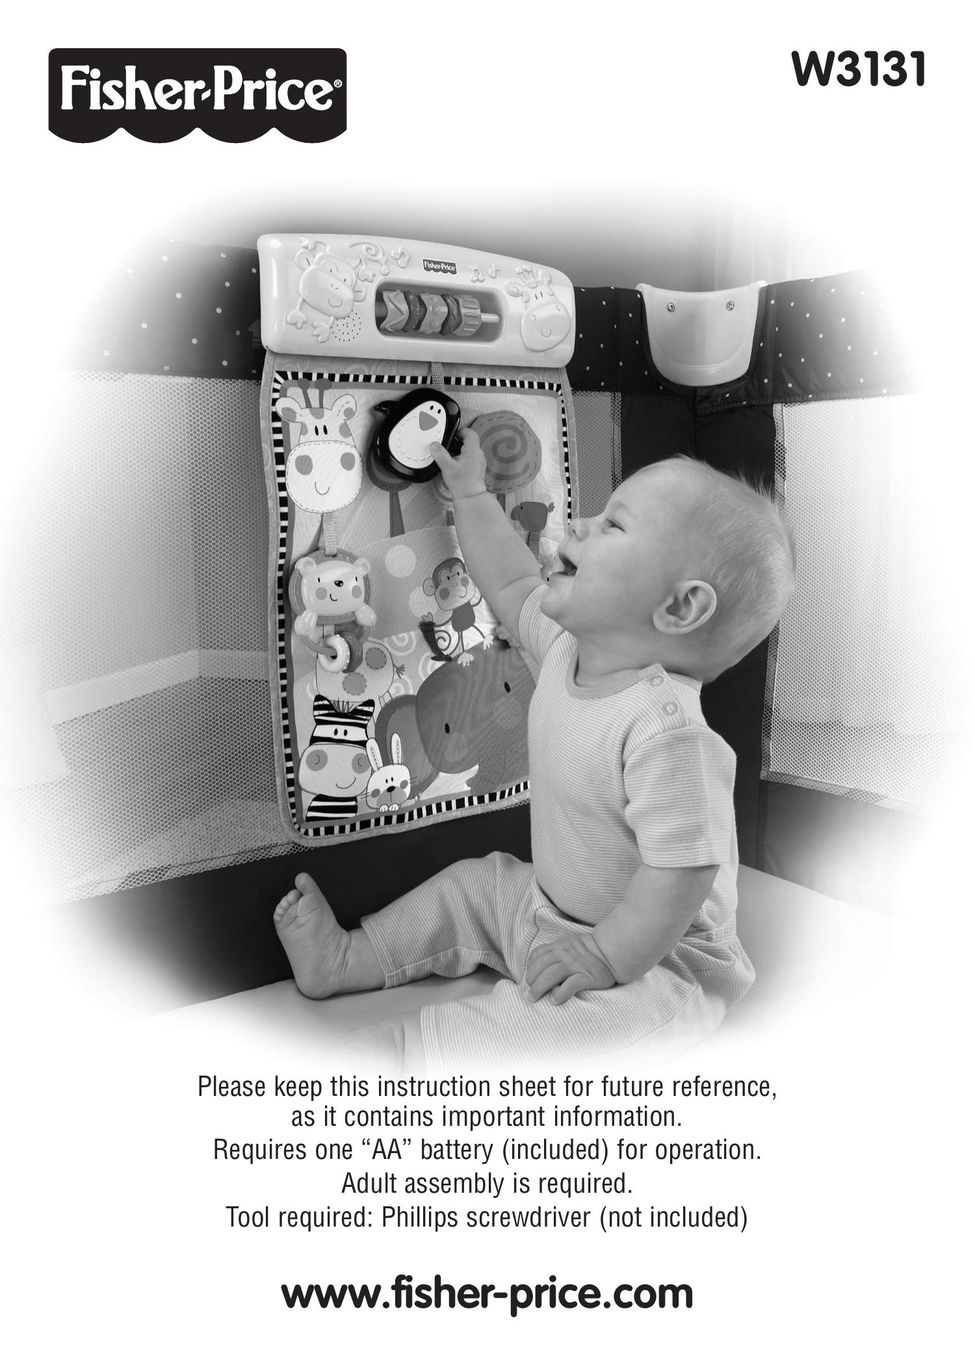 Fisher-Price W3131 Crib Toy User Manual